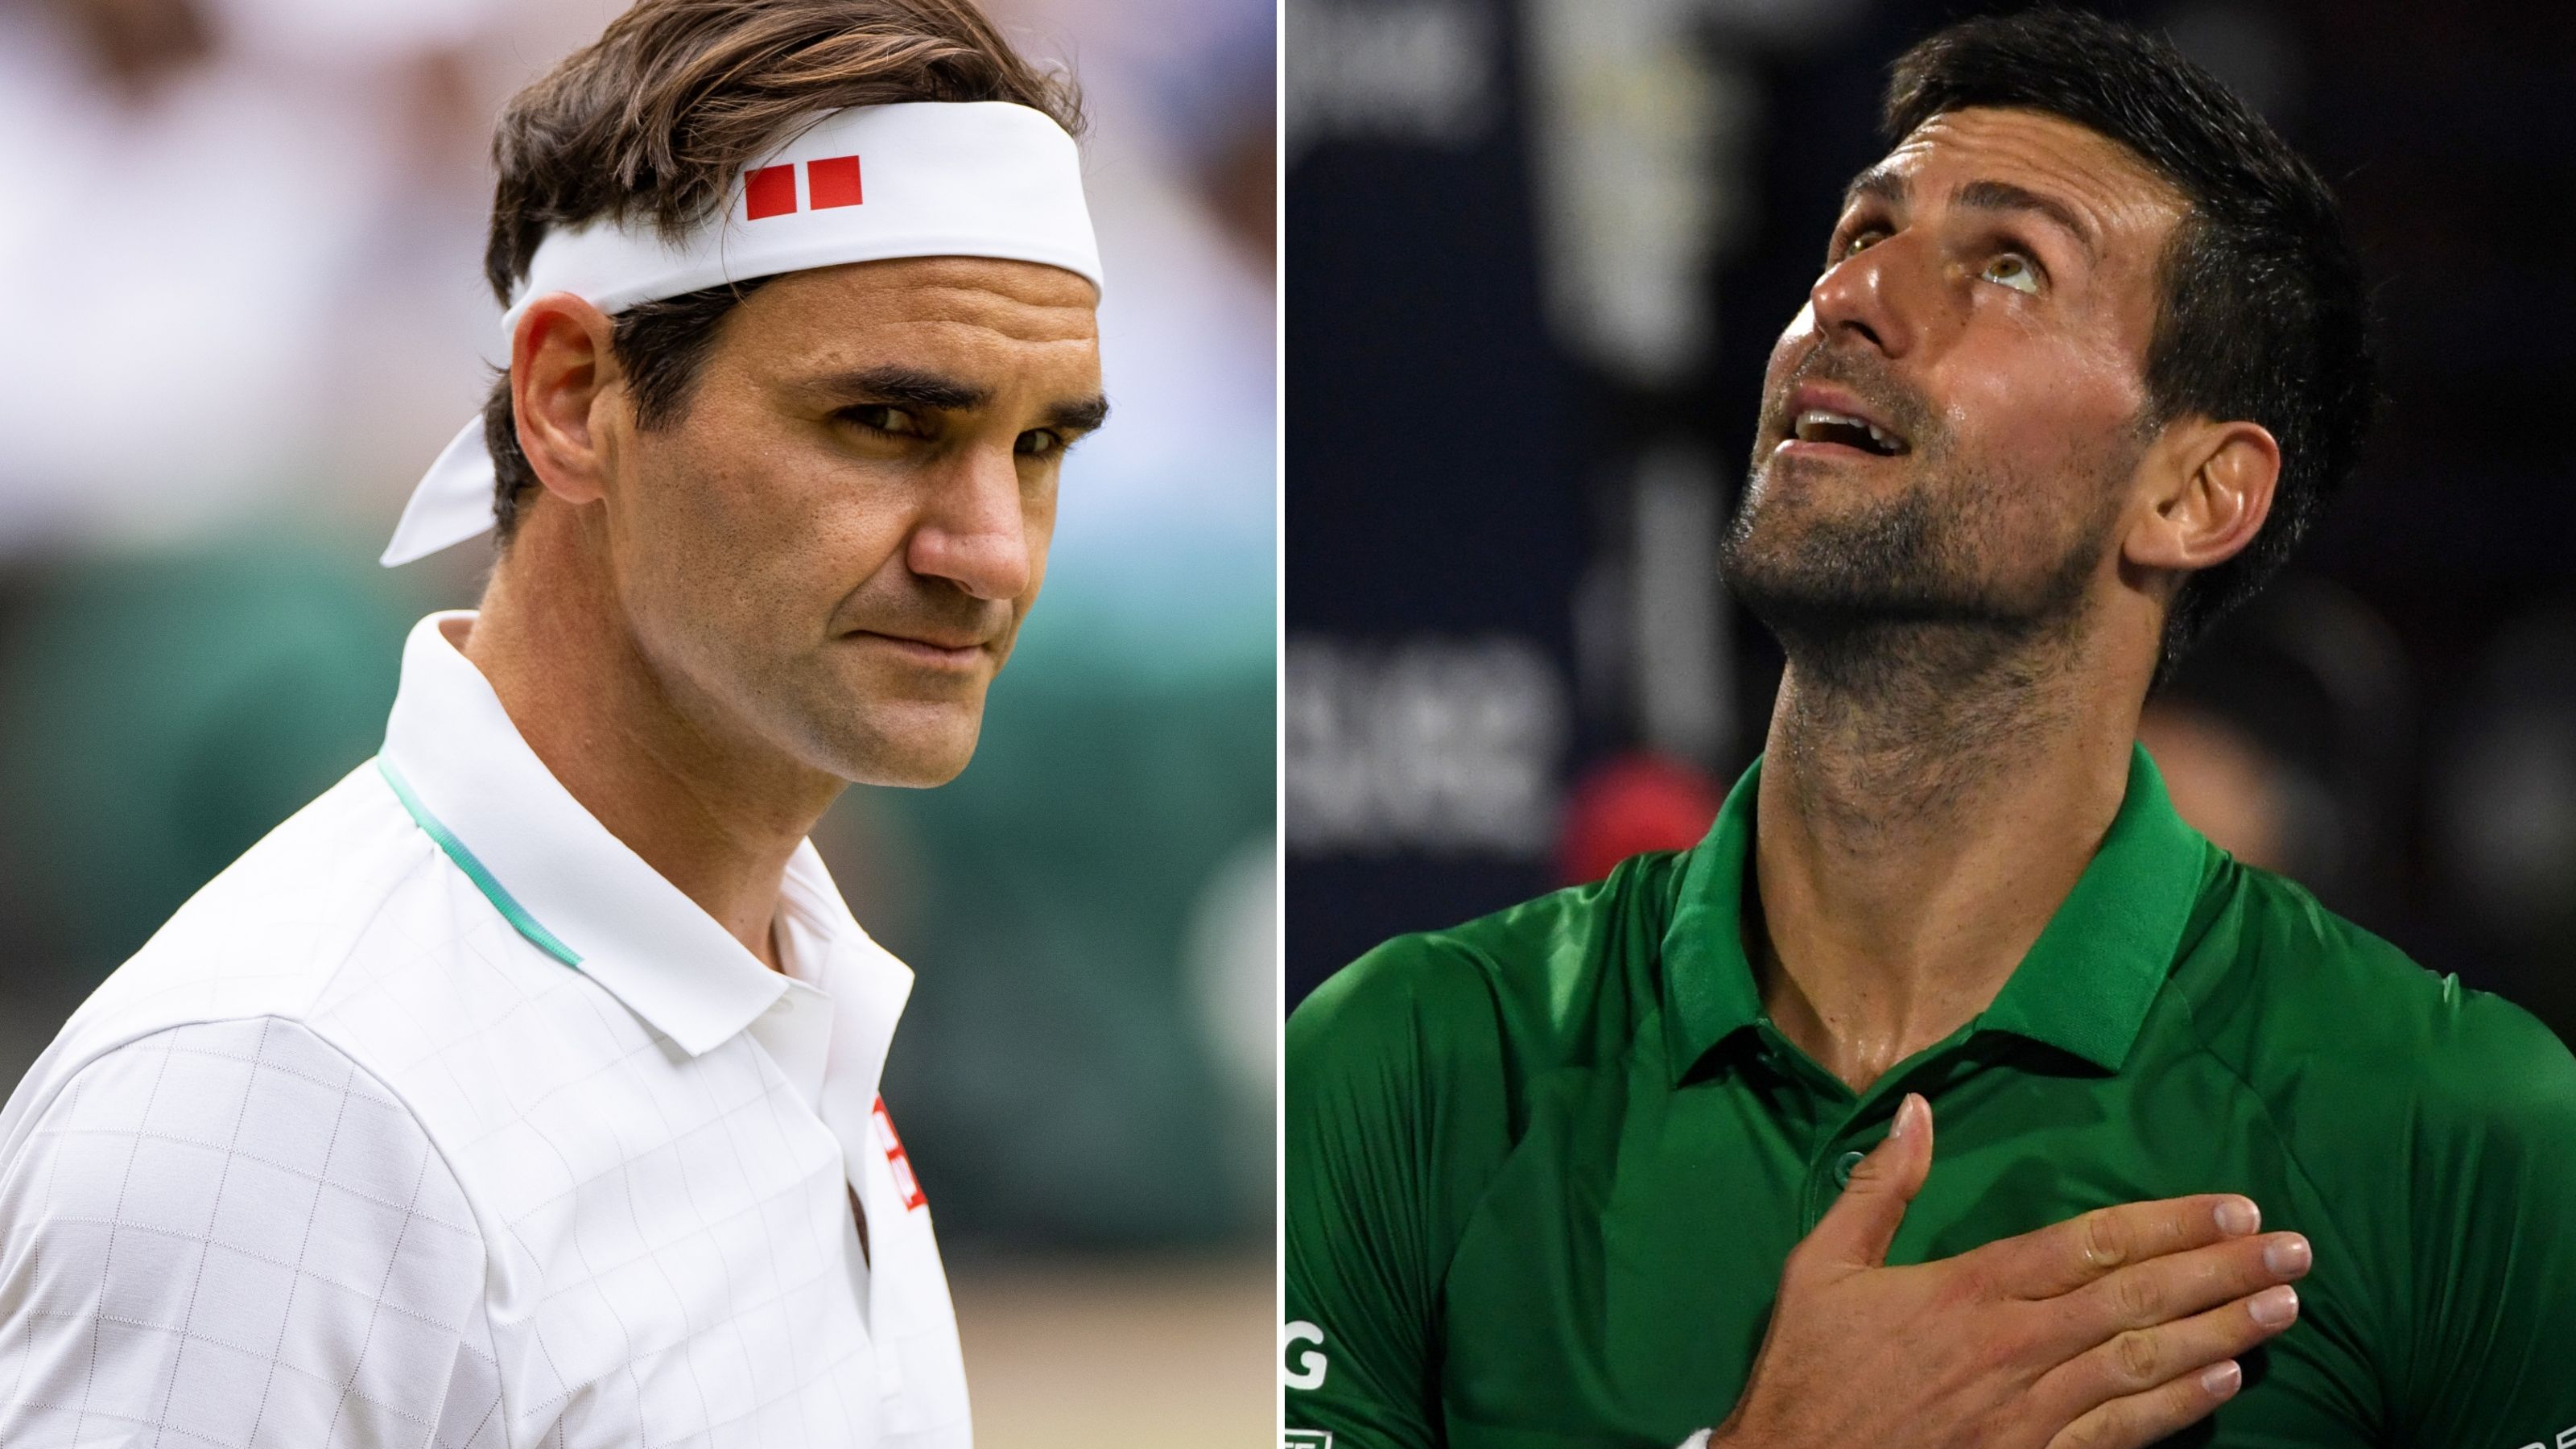 Novak Djokovic's gesture for Ukraine tennis player that Roger Federer, Rafael Nadal wouldn't follow